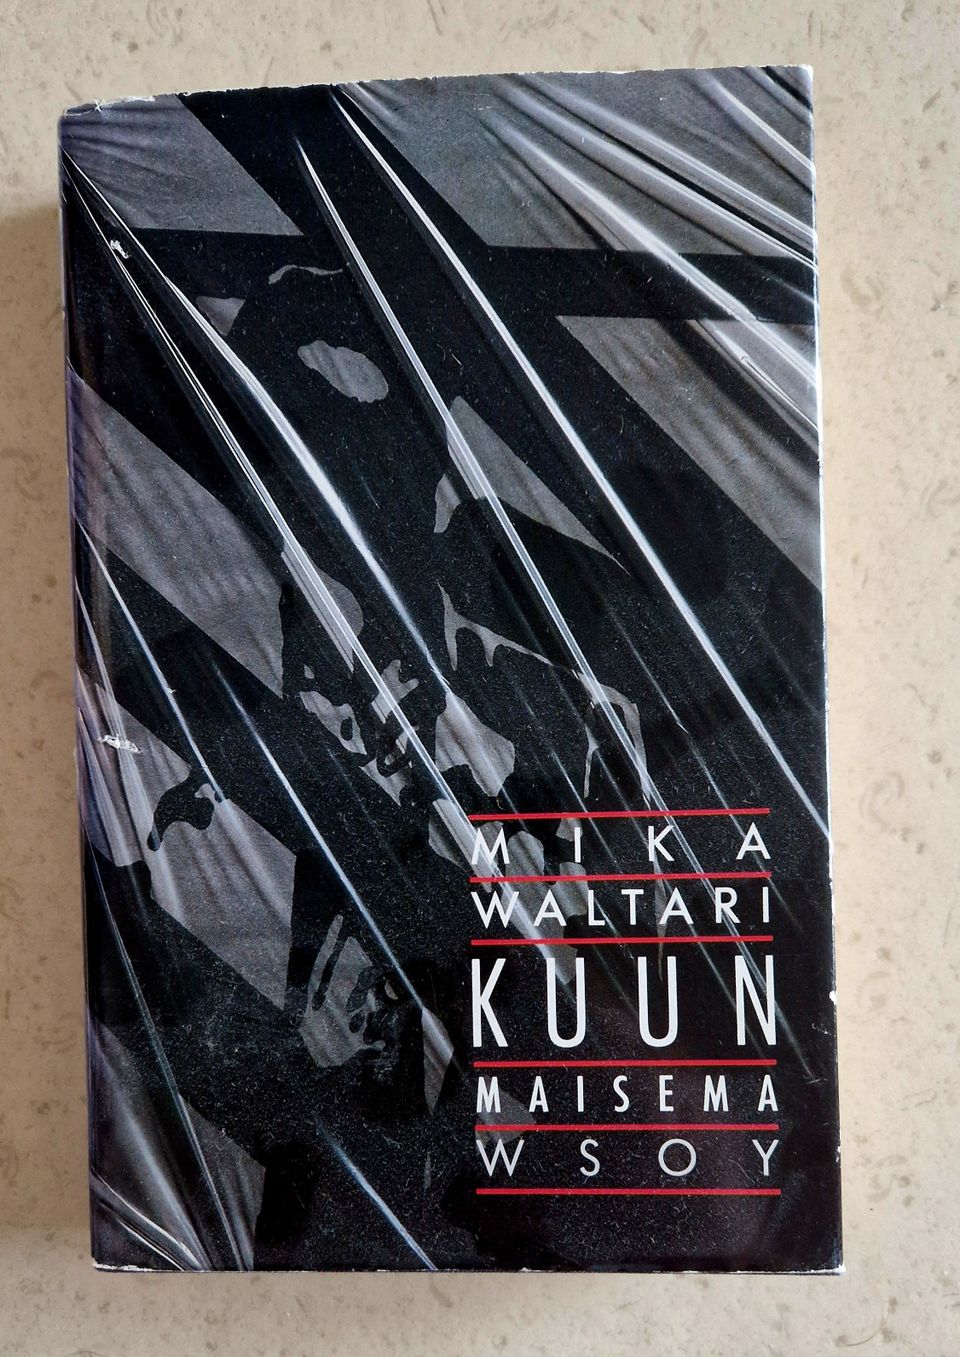 Mika Waltari Kuun Maisema Wsoy